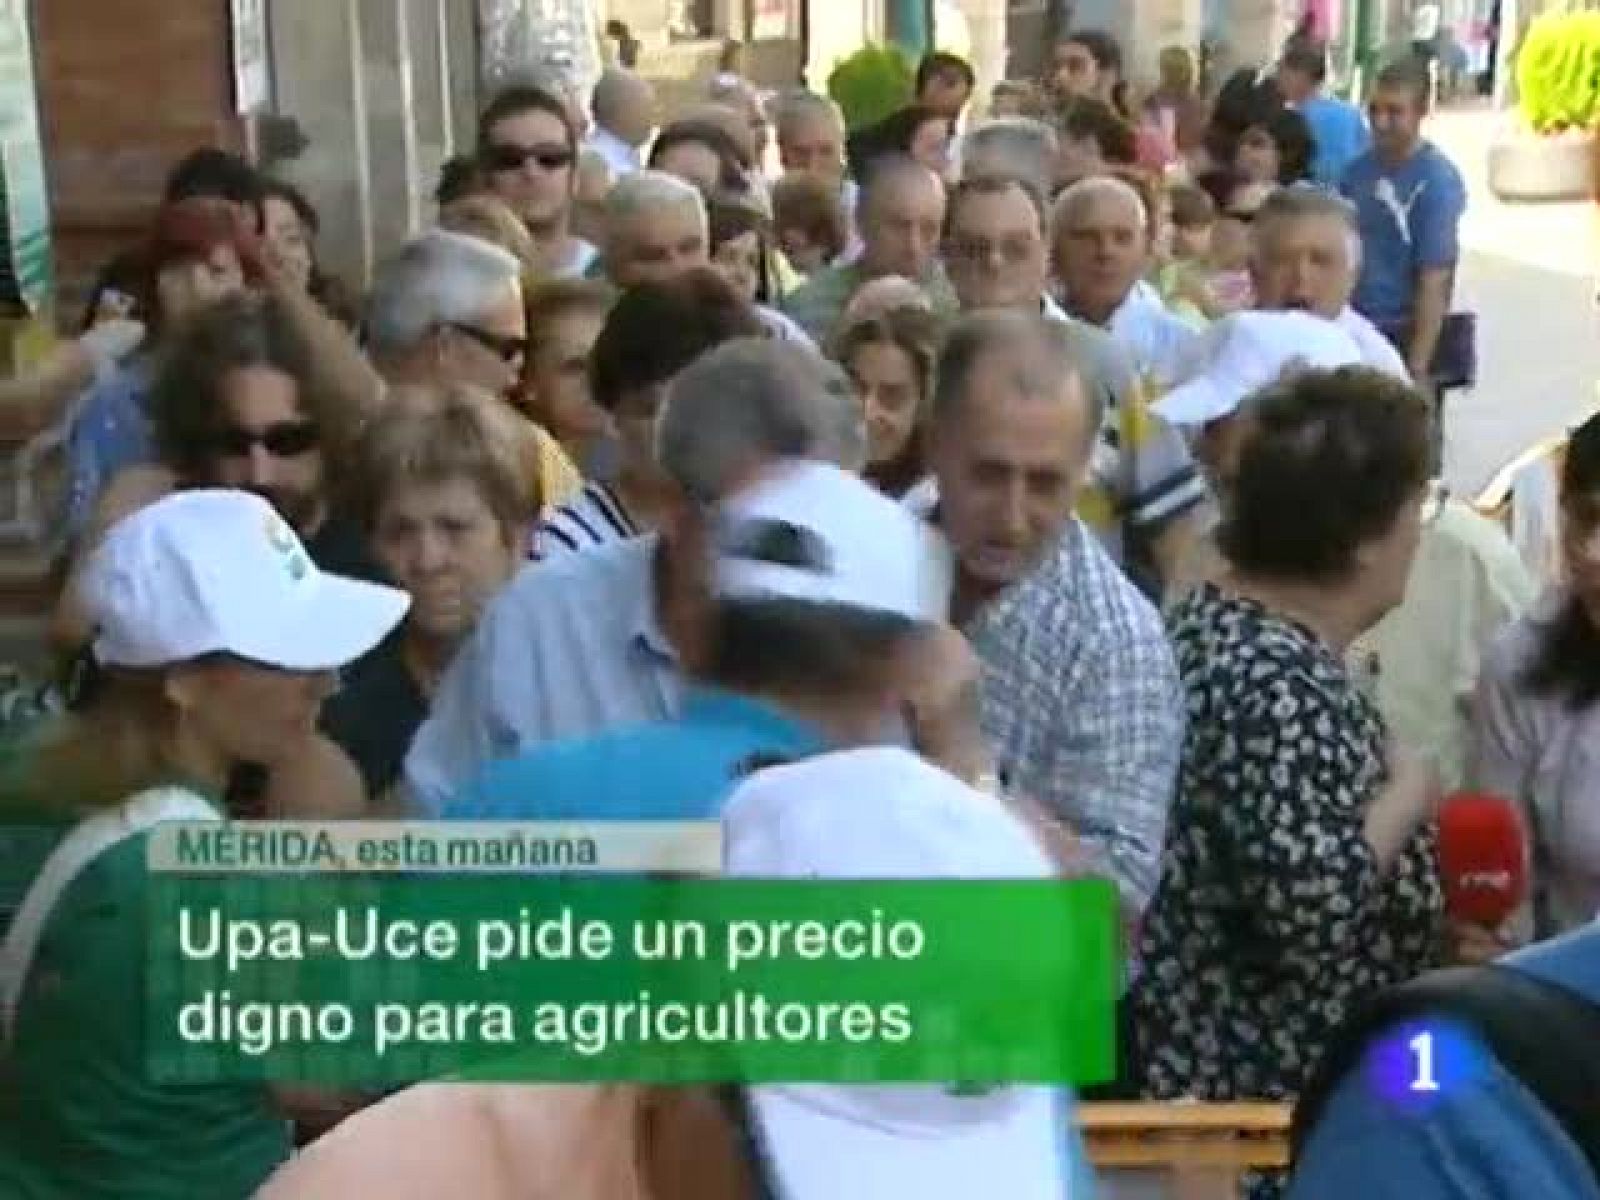 Noticias de Extremadura: Noticias de Extremadura - 09/07/09 | RTVE Play